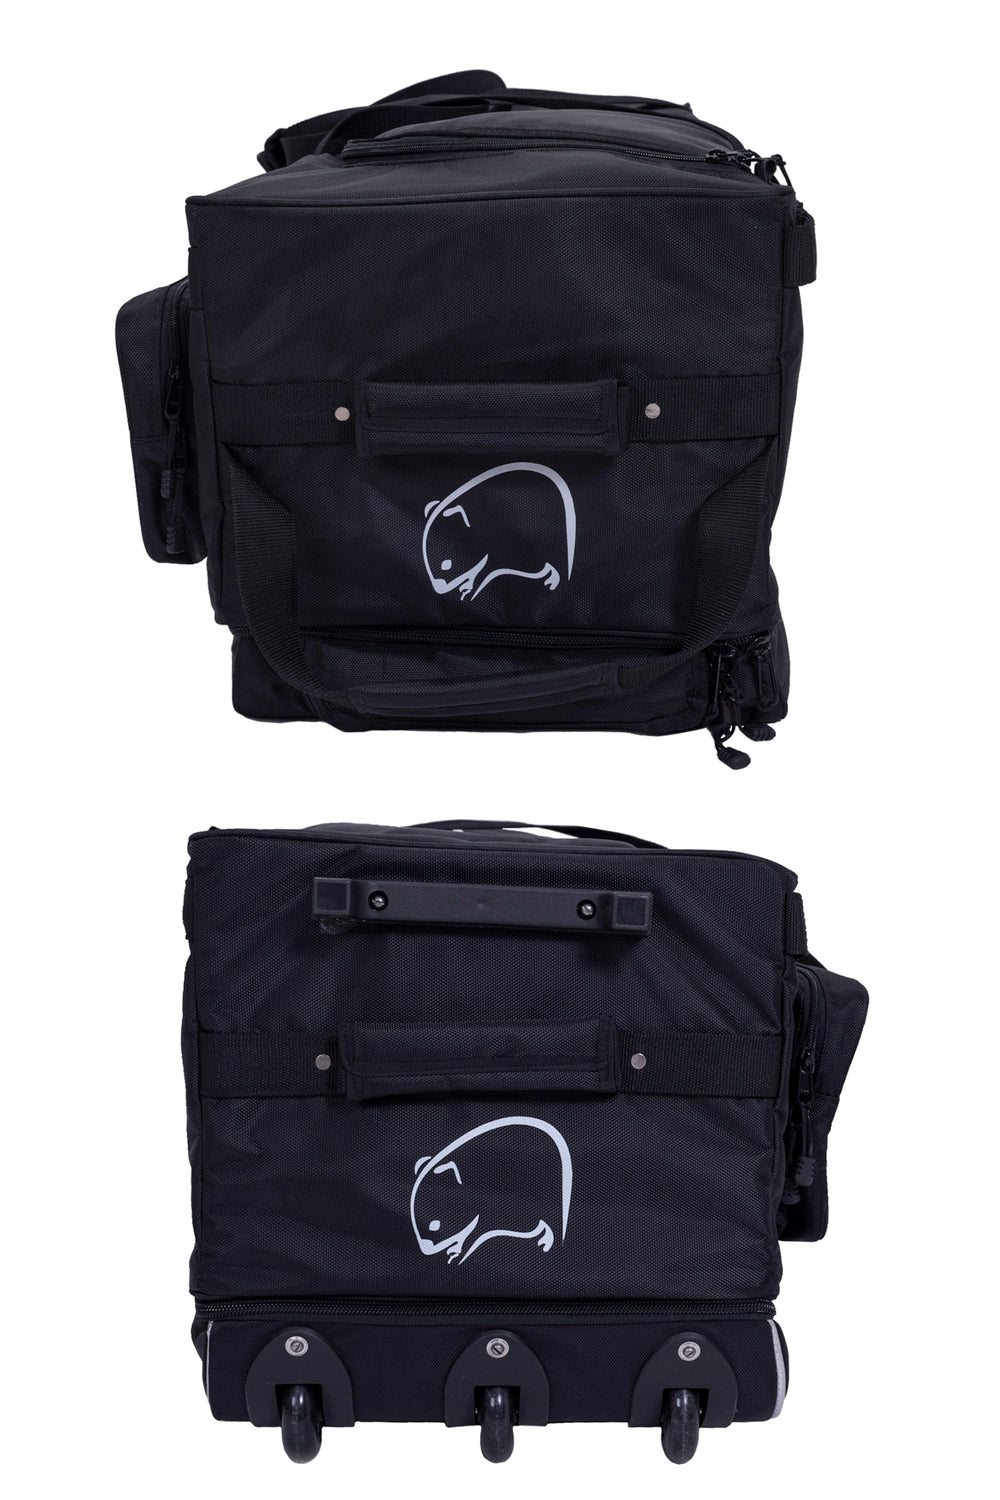 Wombat Cricket Pro Stand Up Wheelie Bag